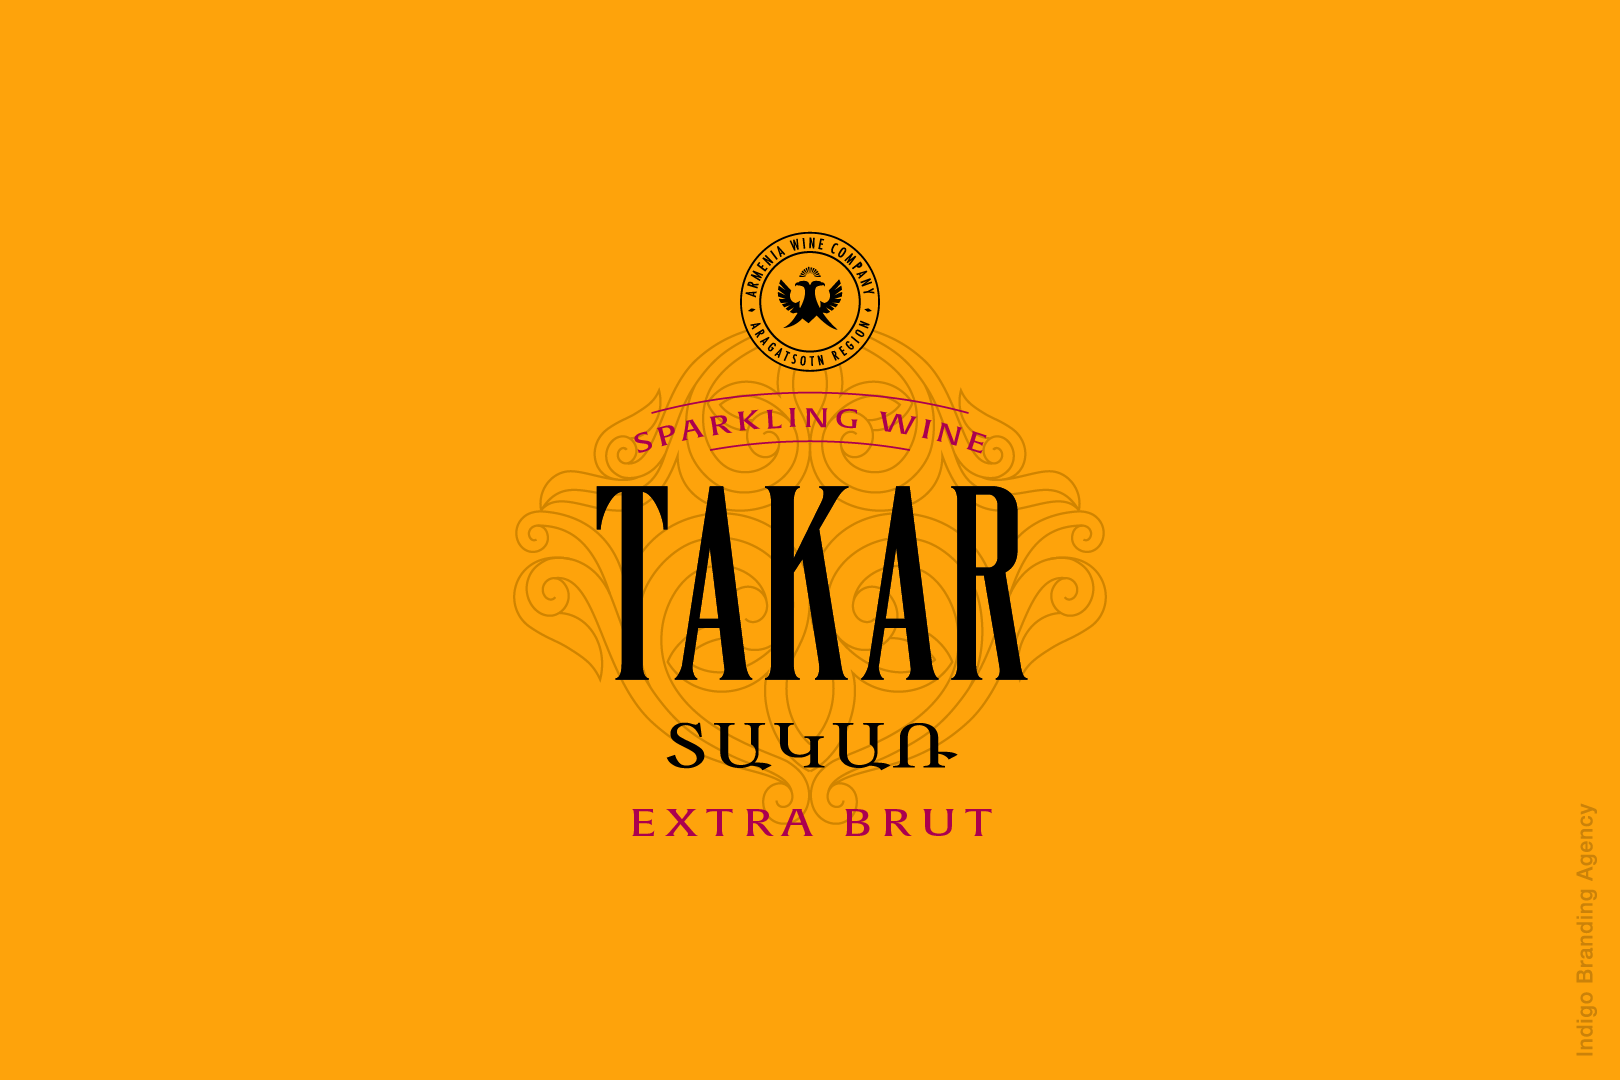 Takar Sparkling Wine branding and labeling by Indigo branding